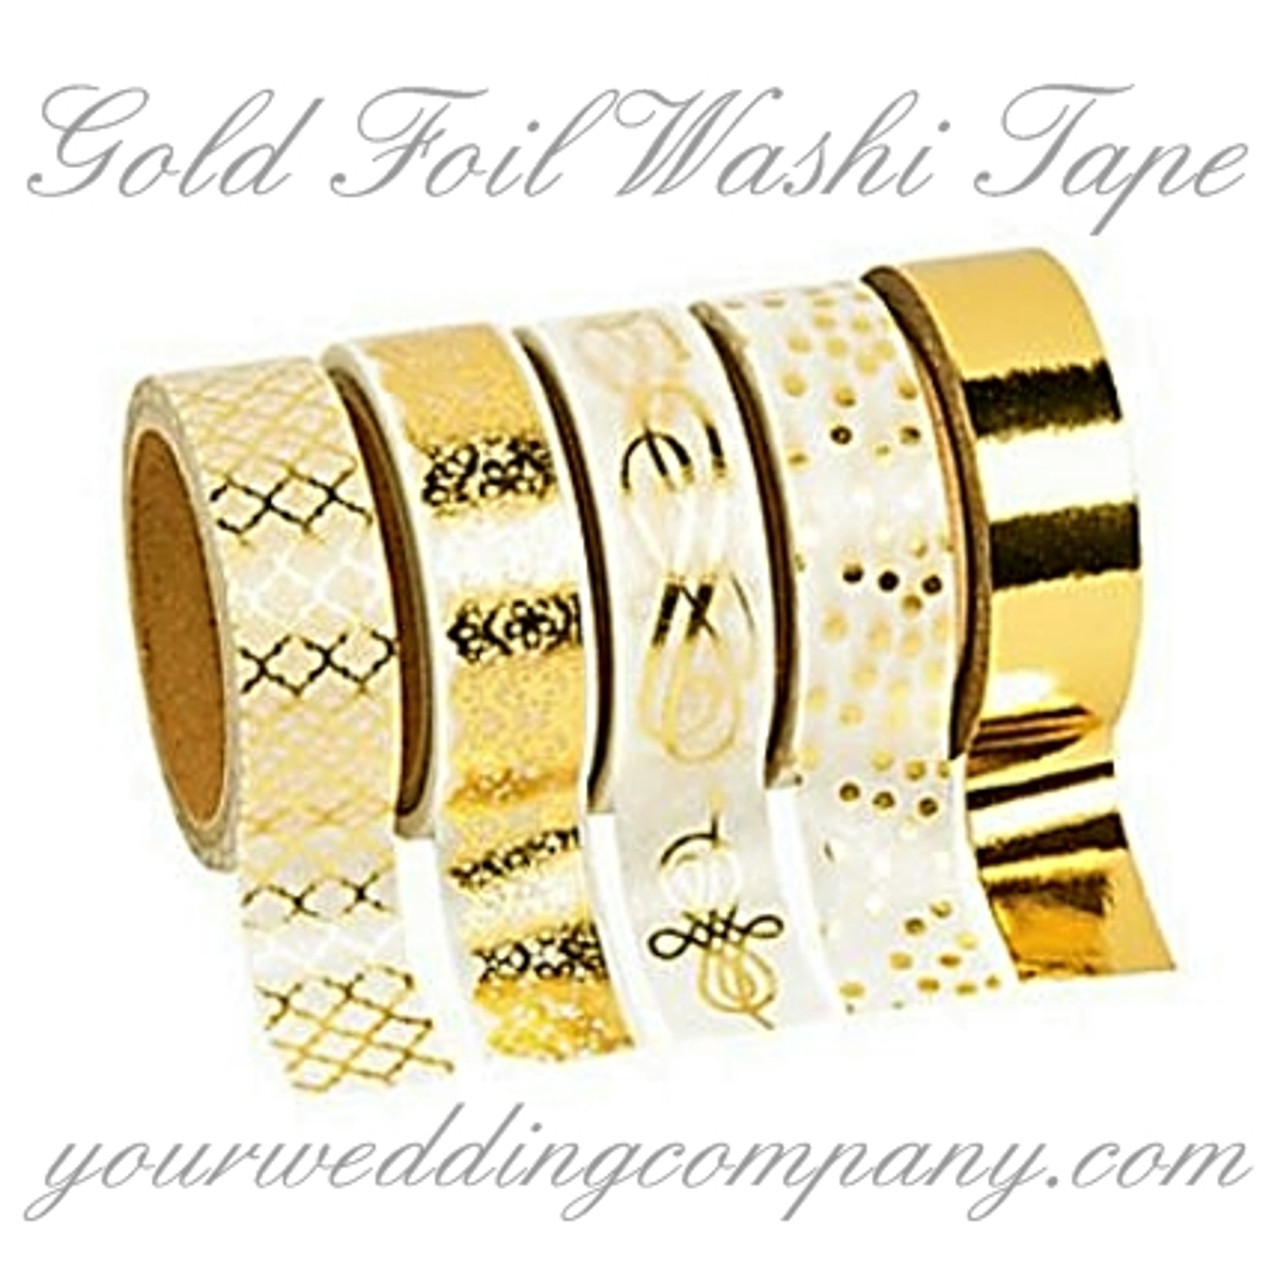 Gold Foil Washi Tape, Washi Tape Favor Decorations